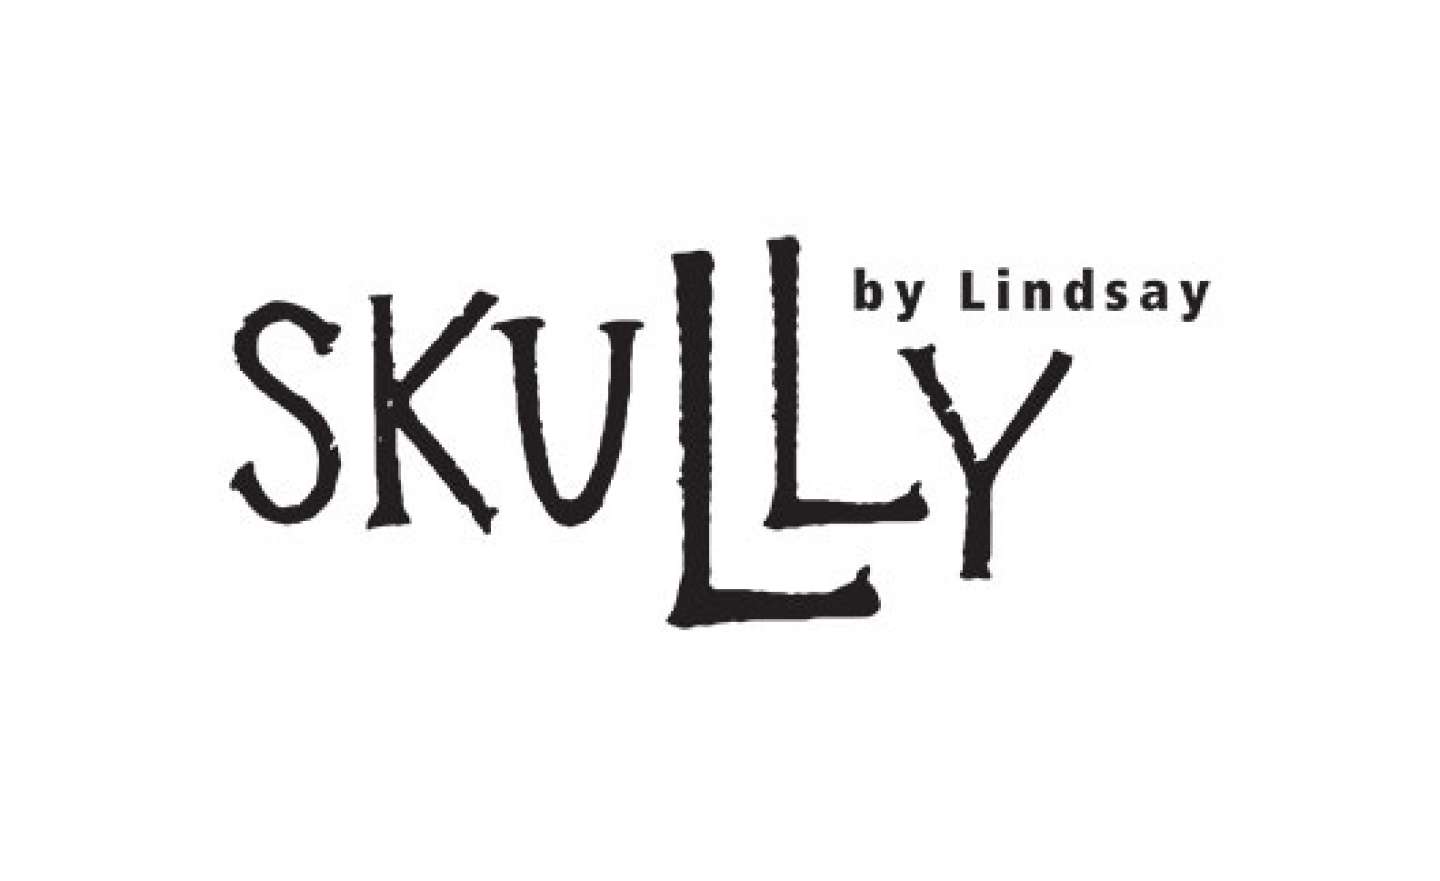 Skully by Lindsay